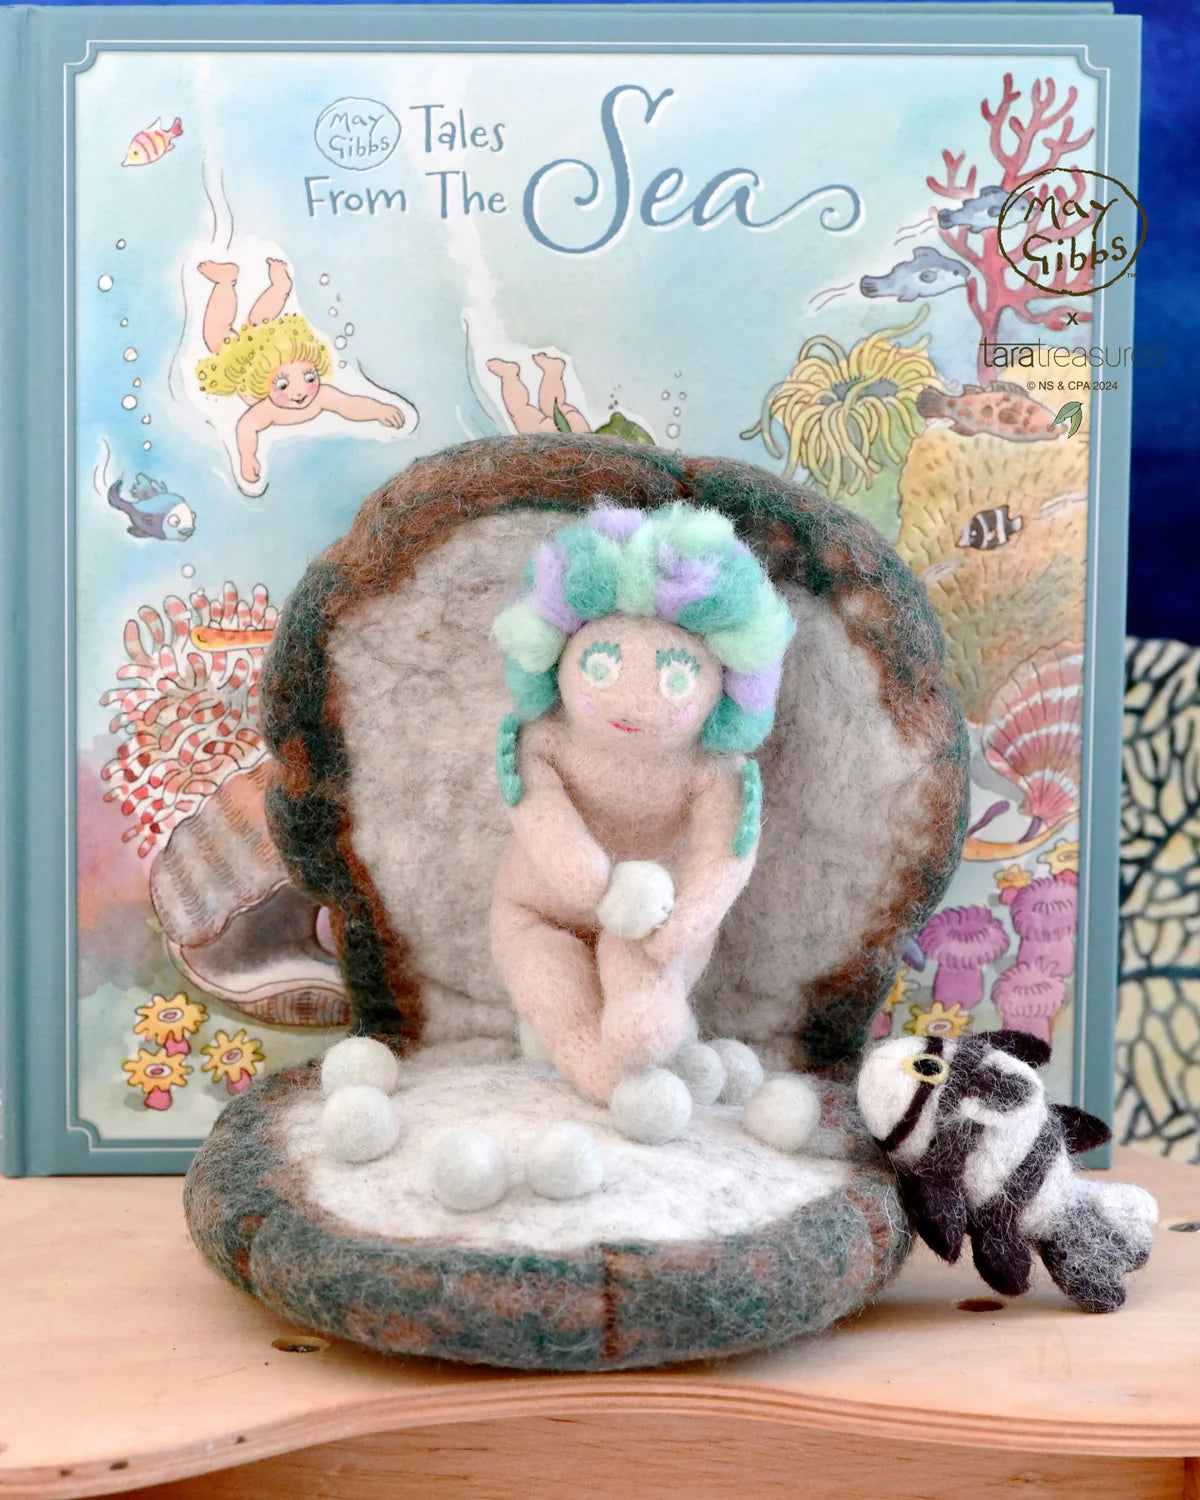 May Gibbs x Tara Treasures Little Obelia, Clam Shell and Fish Toy - Cheeky Junior